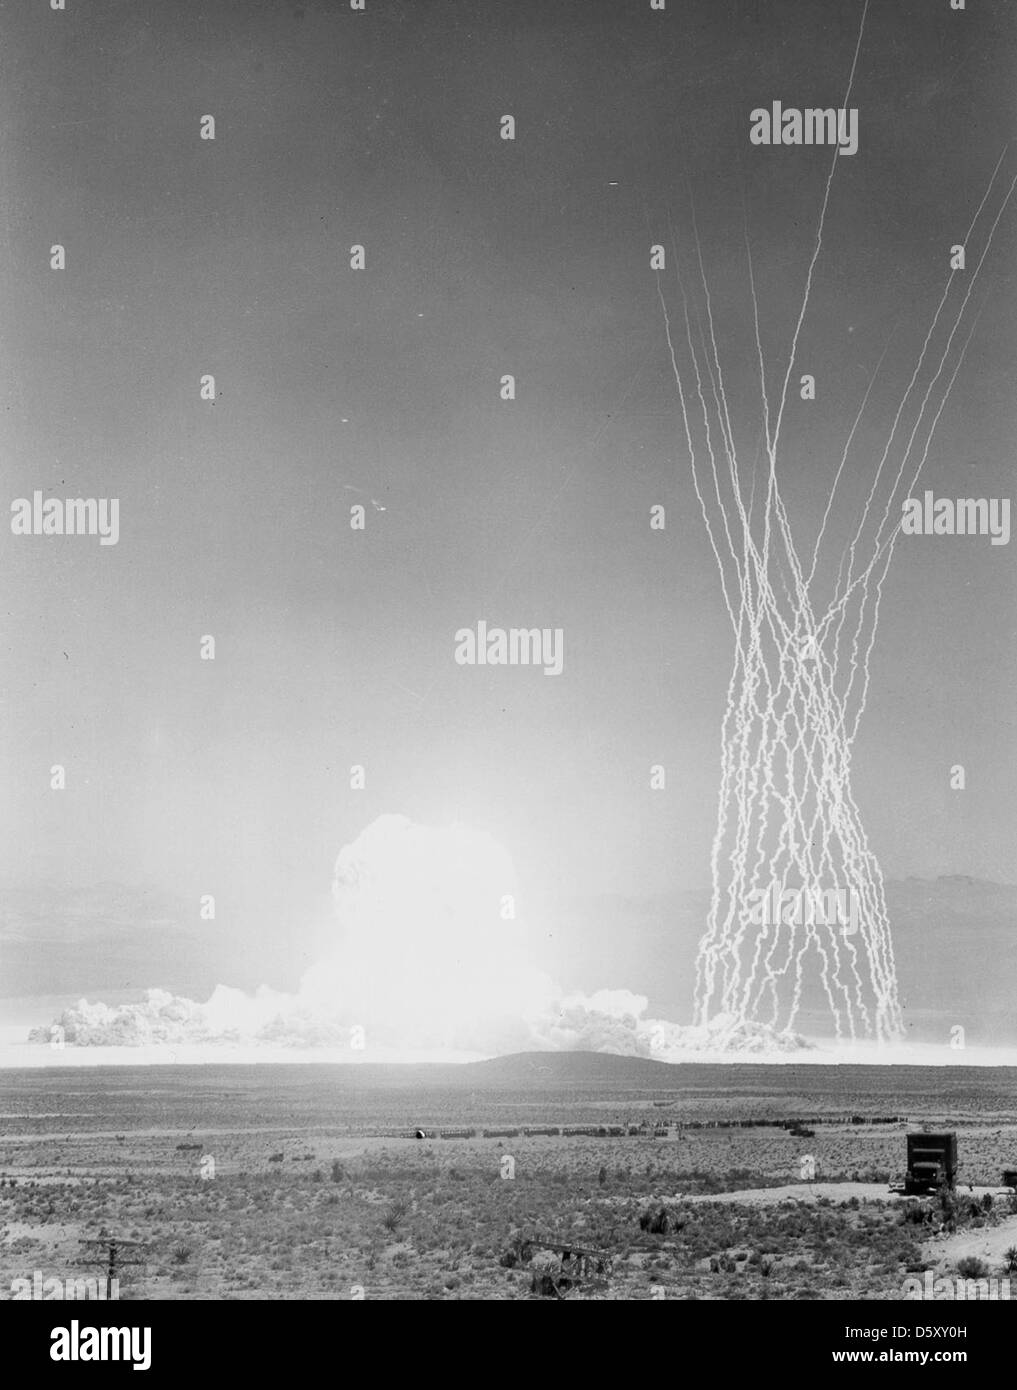 Operazione "teiera' - 'SET' (effetti militari prova)-l'15 aprile 1955 test atomico al Nevada Test Site. Foto Stock